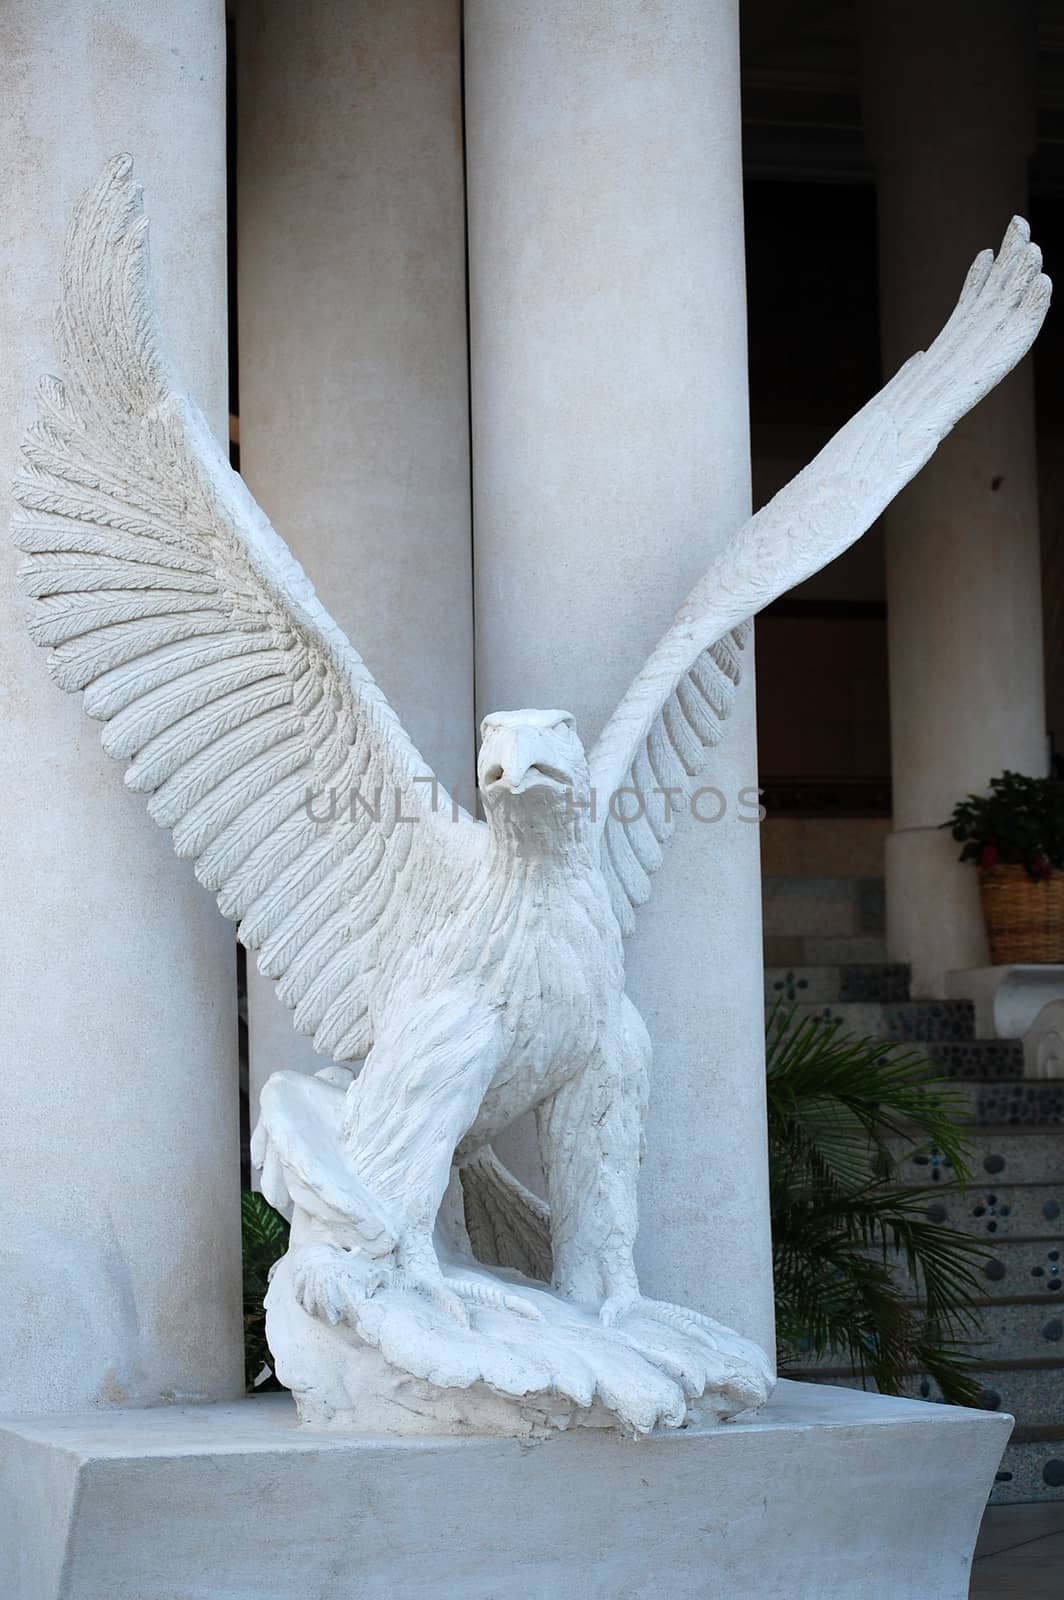 Java Hotel's eagle statue in Ilocos Norte, Philippines by imwaltersy